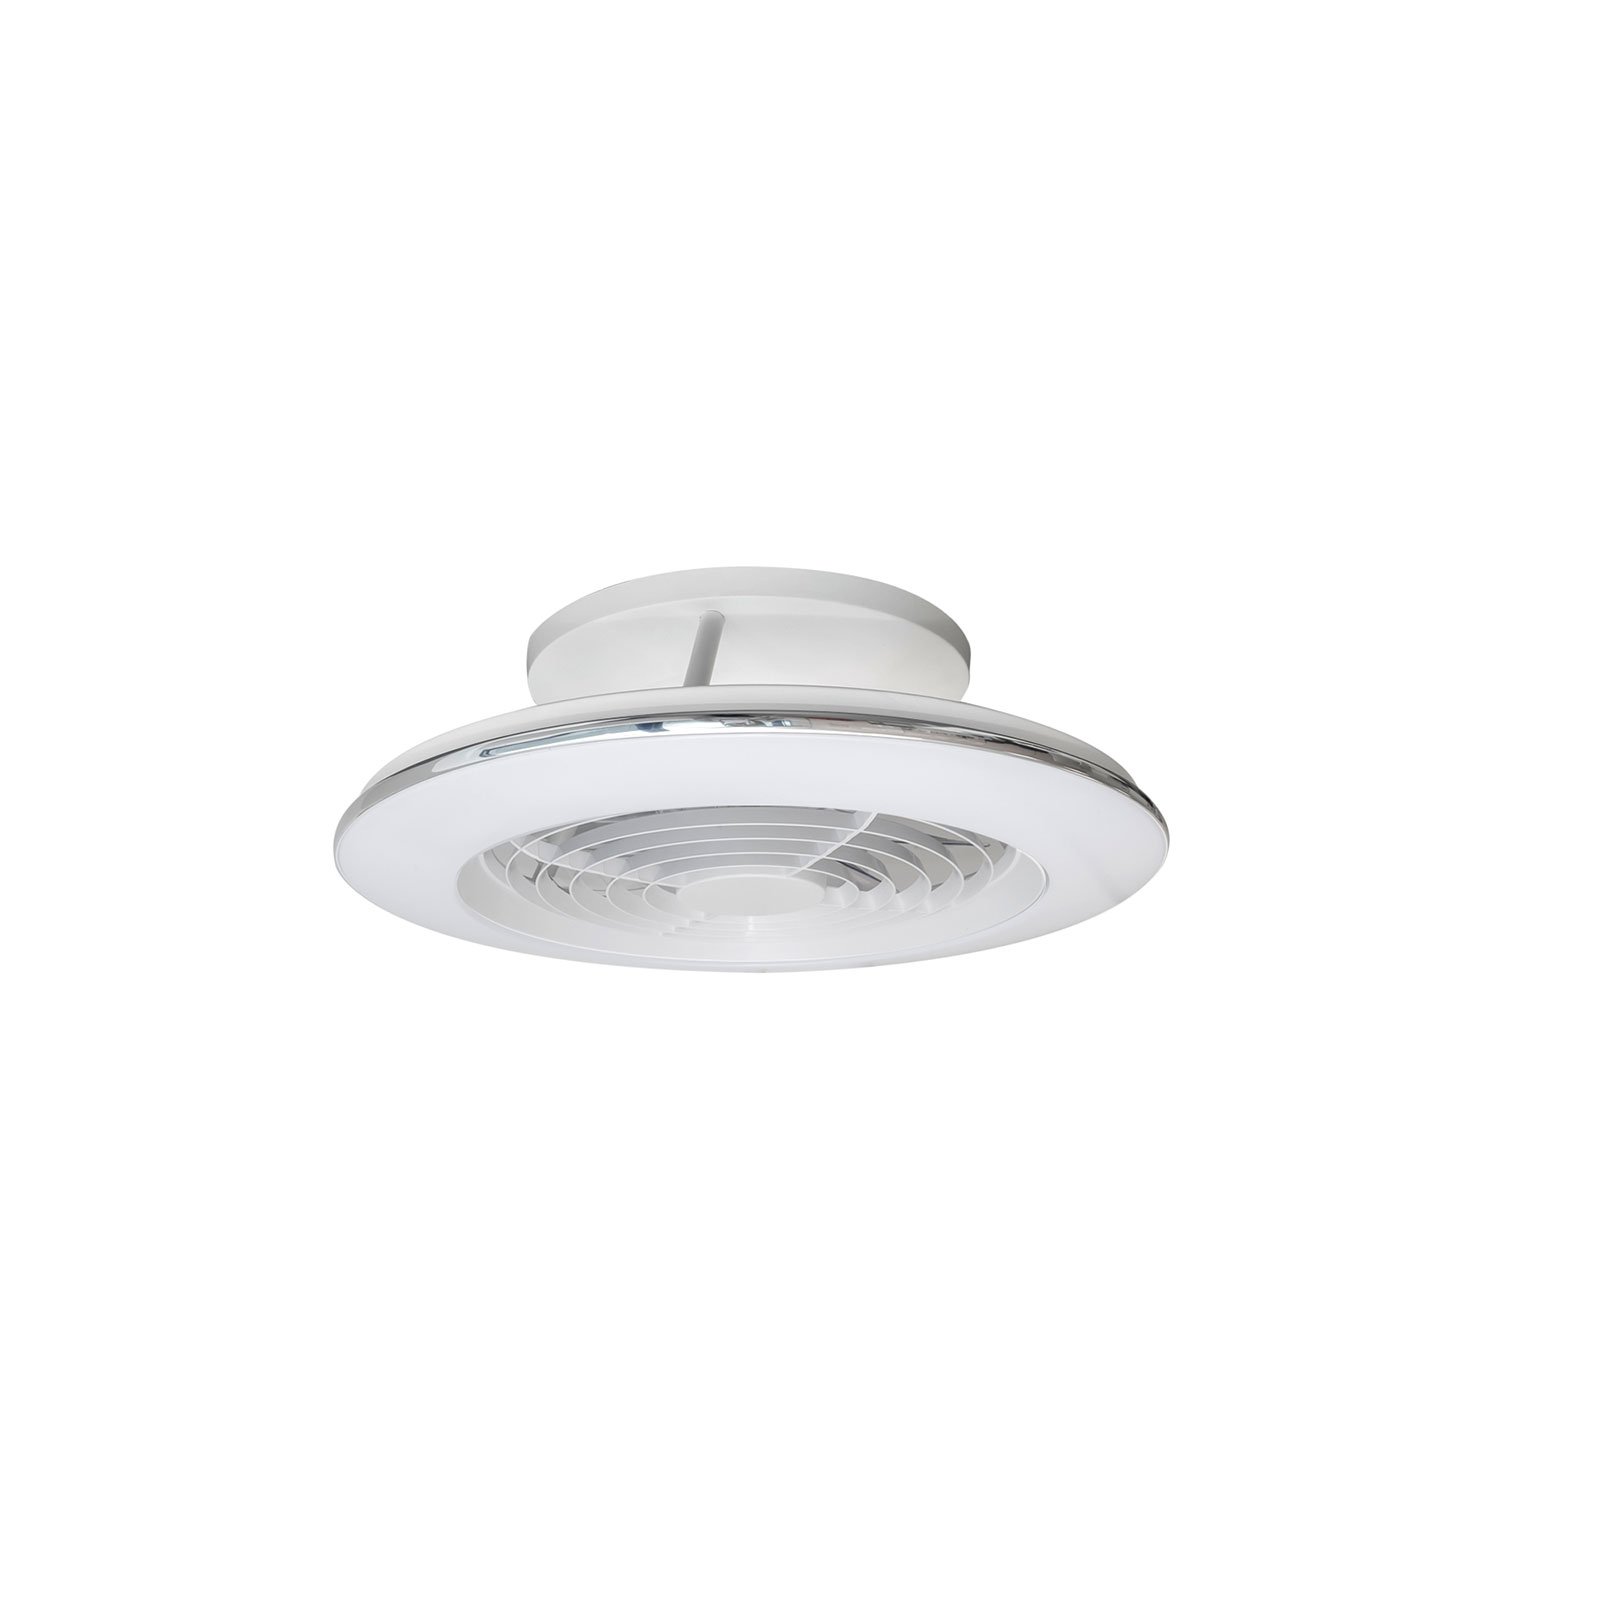 Ventilateur de plafond LED Alisio mini, blanc